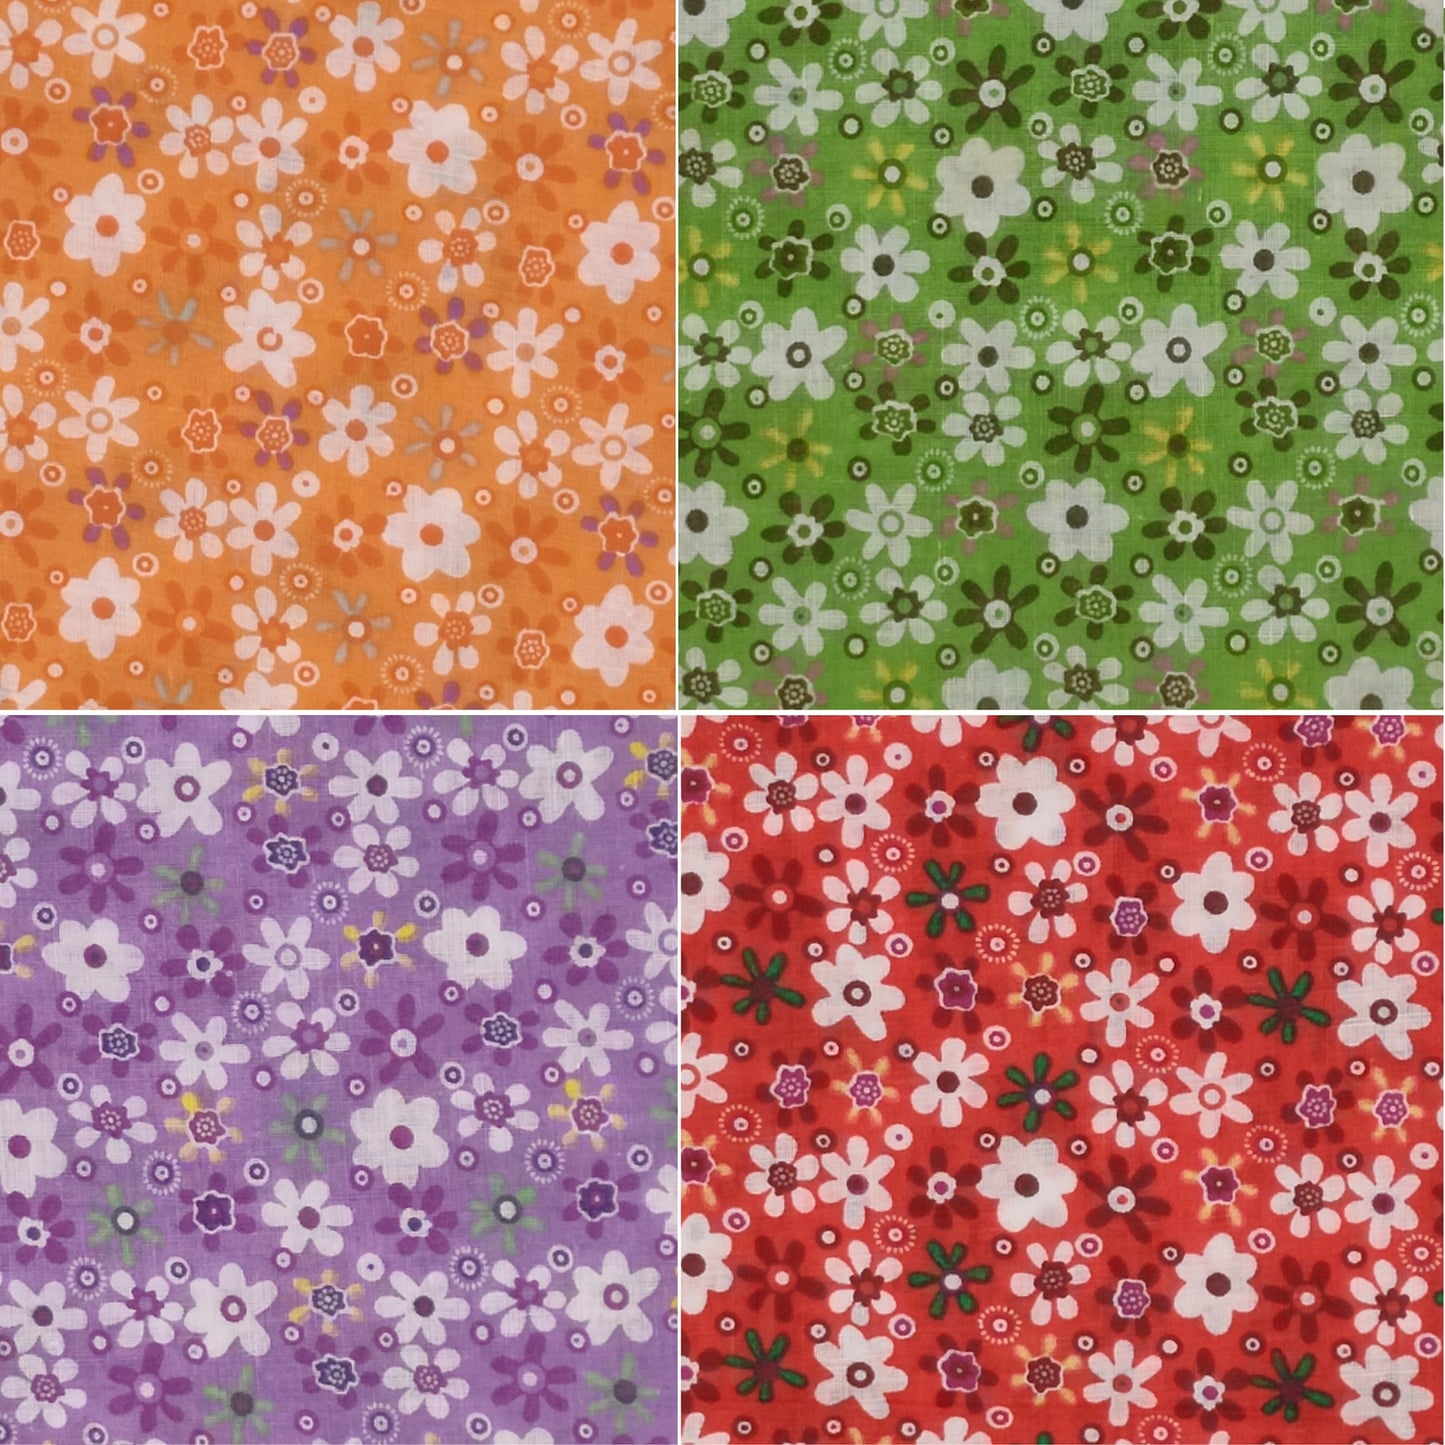 12Pcs (2 size Options) Fat Quarters Fabric Sewing Colors Patterns Quarter Precut Fabrics for Quilting Squares Cotton Material Patchwork DIY